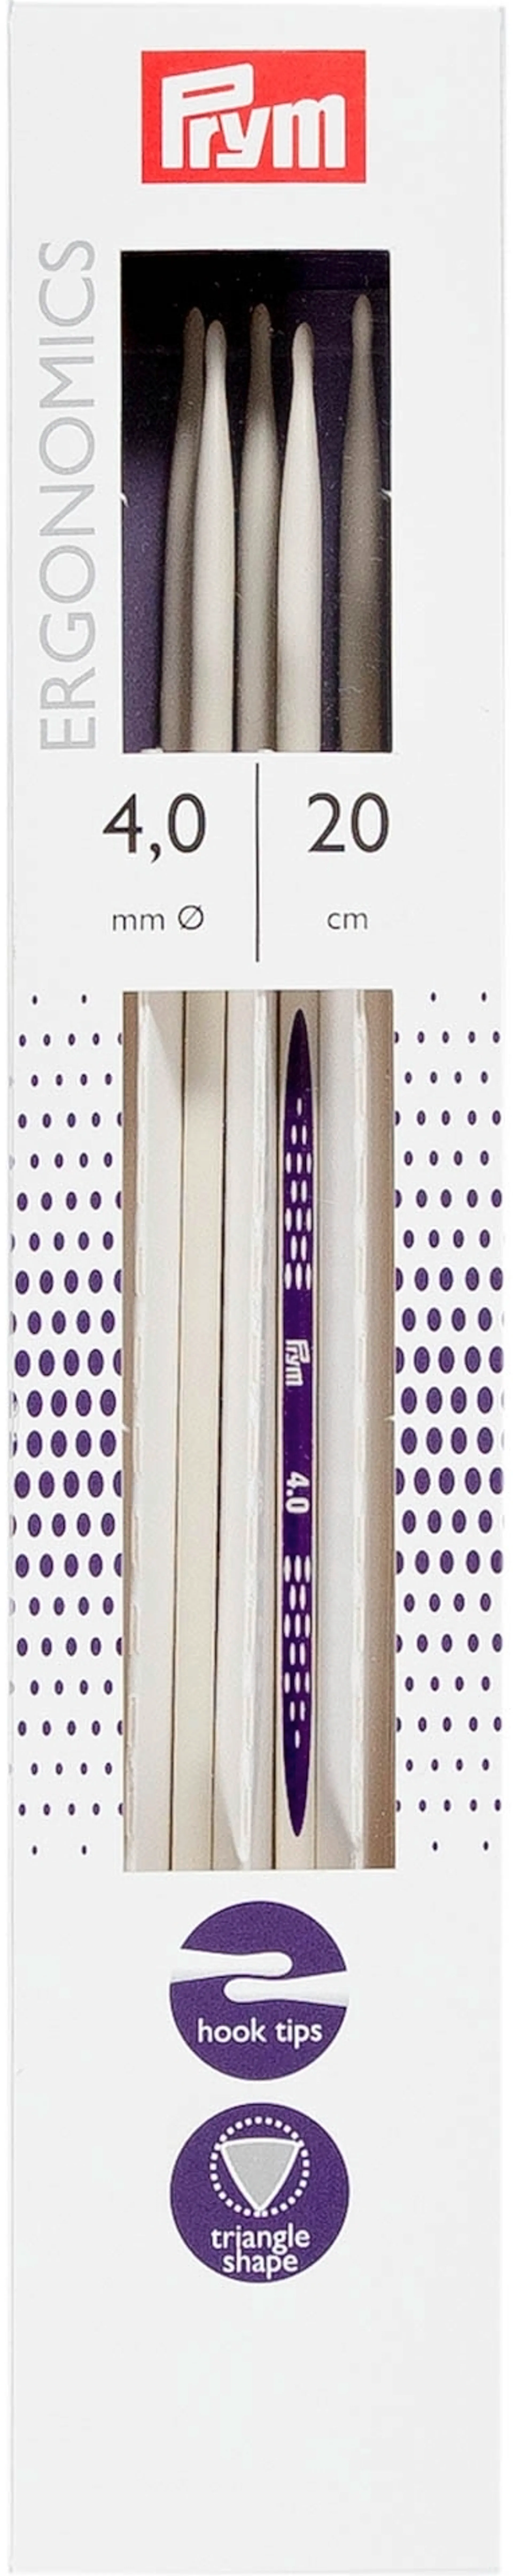 Prym sukkapuikko ergonominen 20cm - 4mm